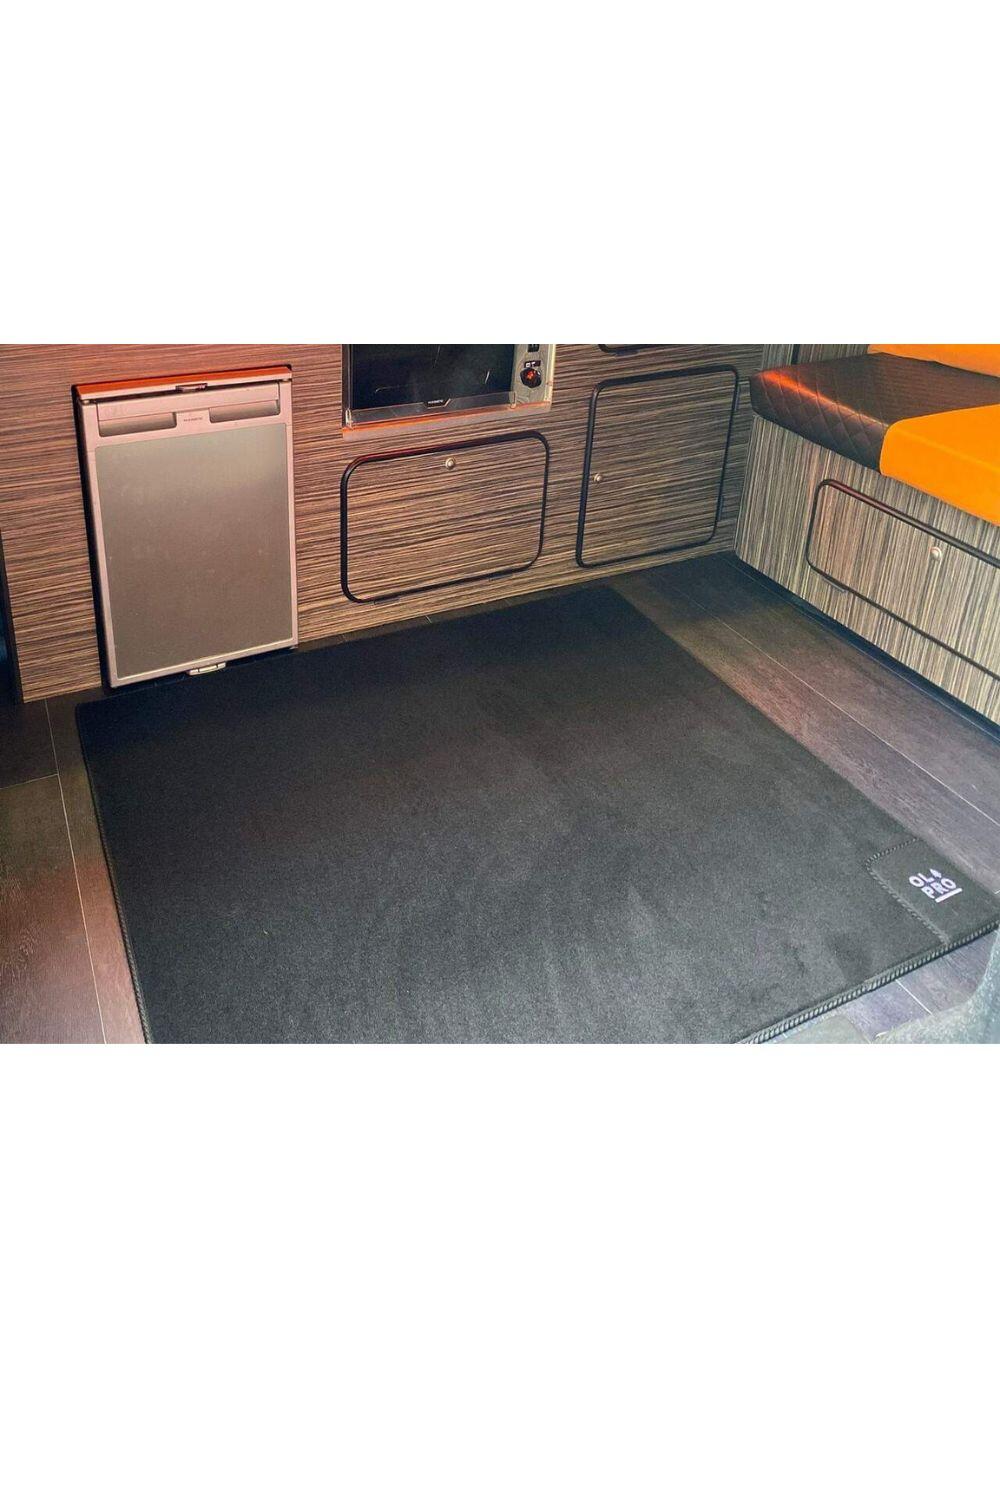 OLPRO OLPRO Rear Campervan Living Area Carpet 1m x 1m